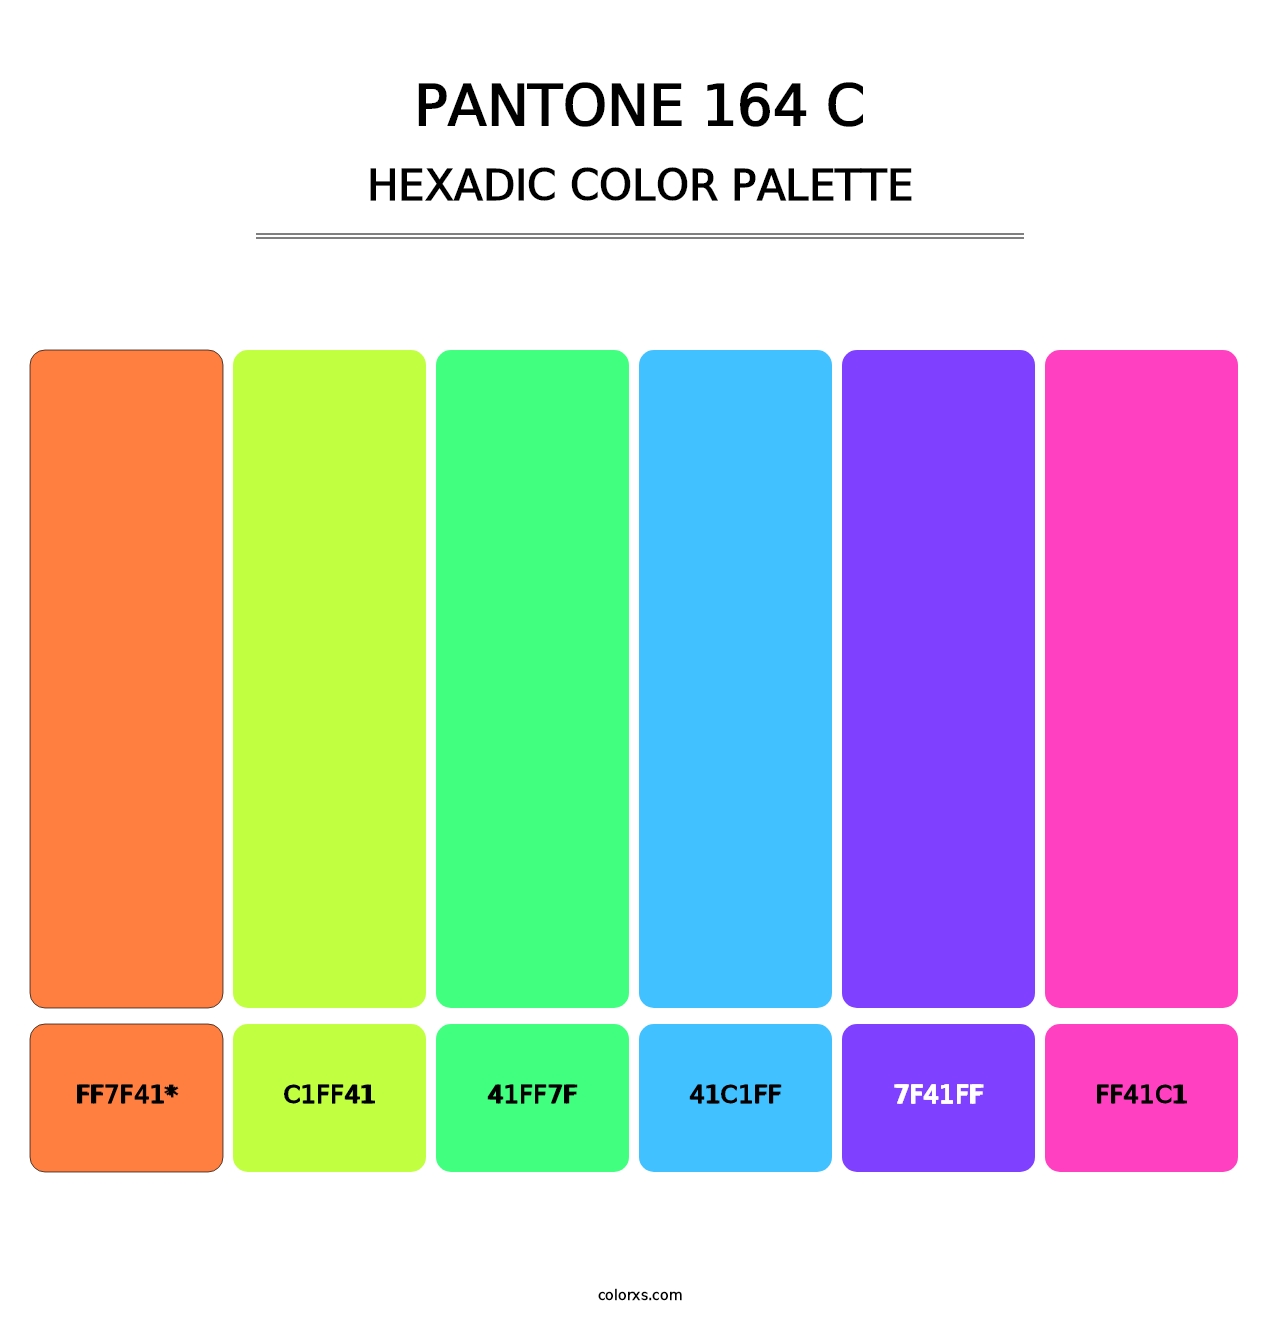 PANTONE 164 C - Hexadic Color Palette